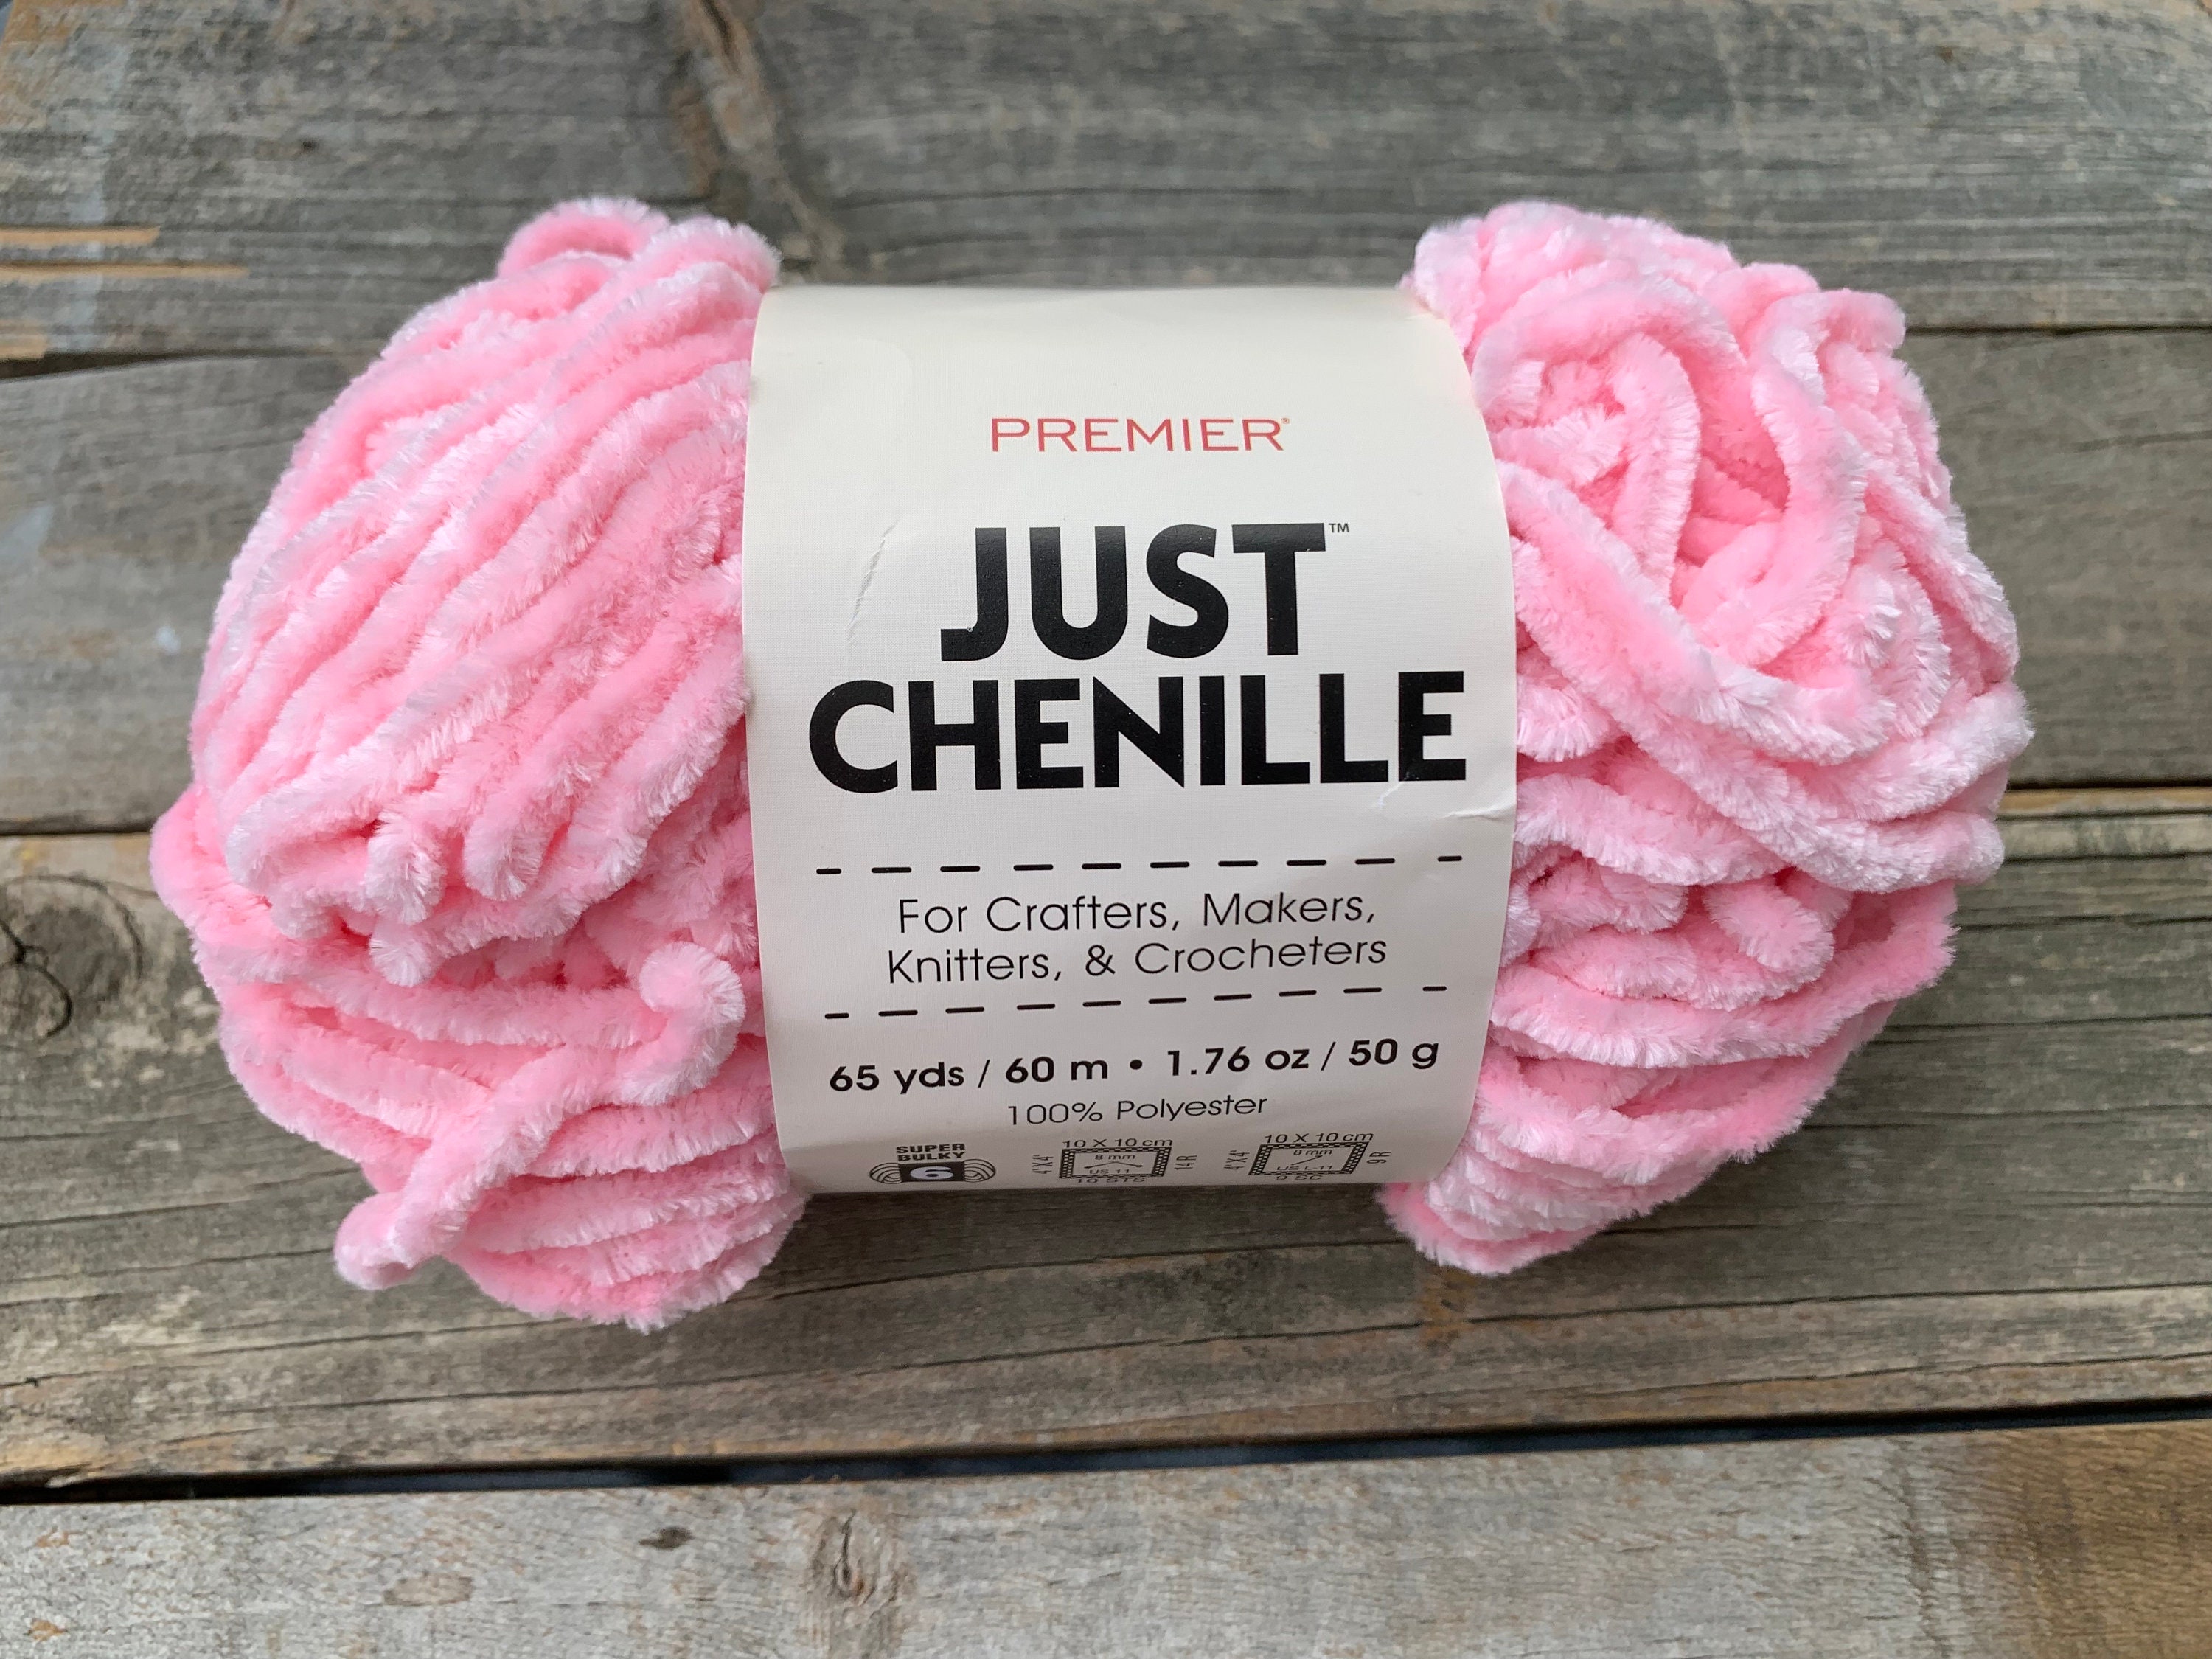 Premier Chenille Yarn in Pink Just Chenille Yarn Fuzzy Super Soft